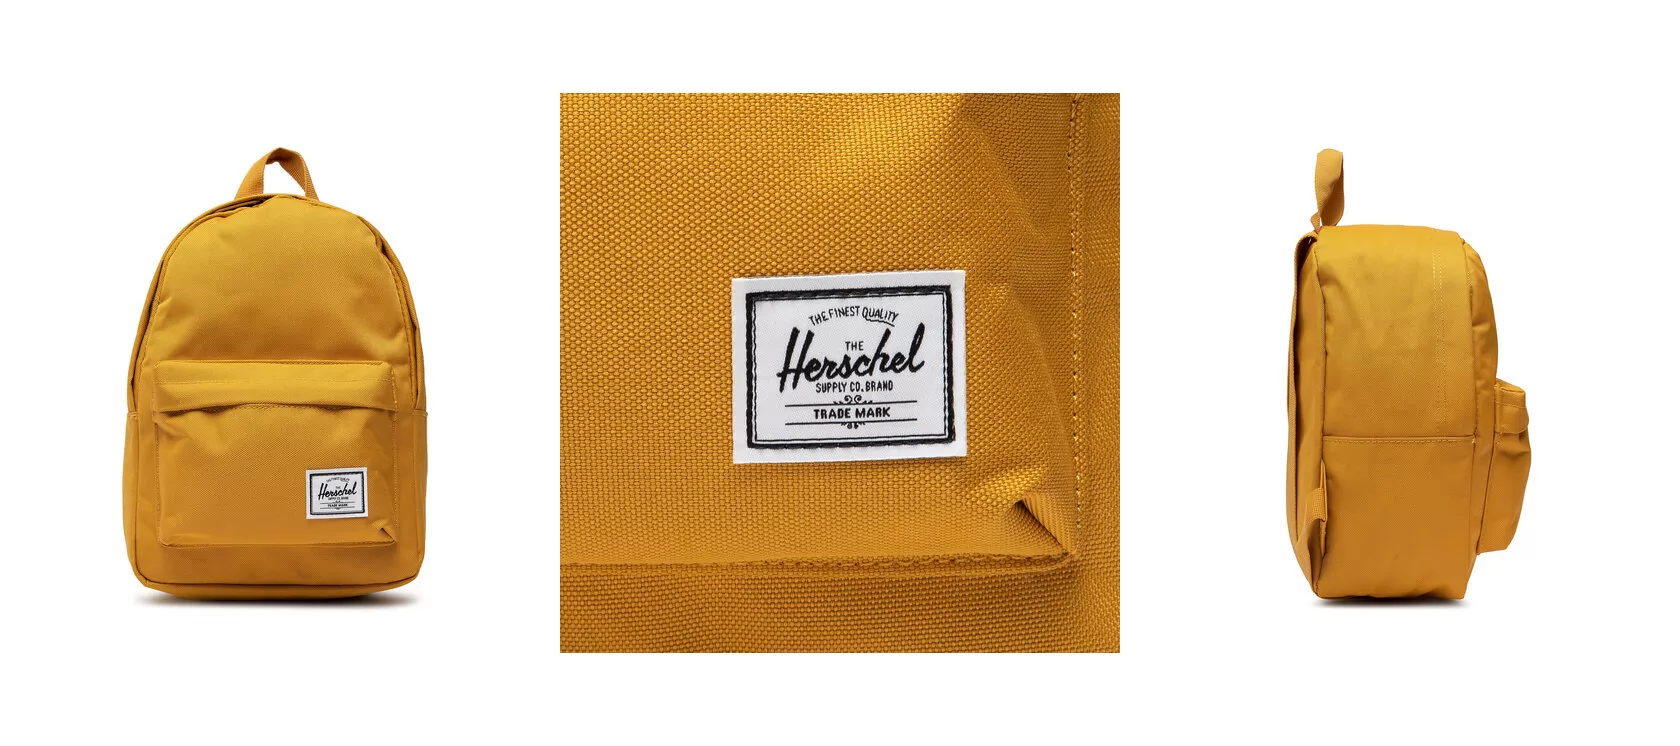 Herschel Plecak Classic Mn 10787-05644 Żółty